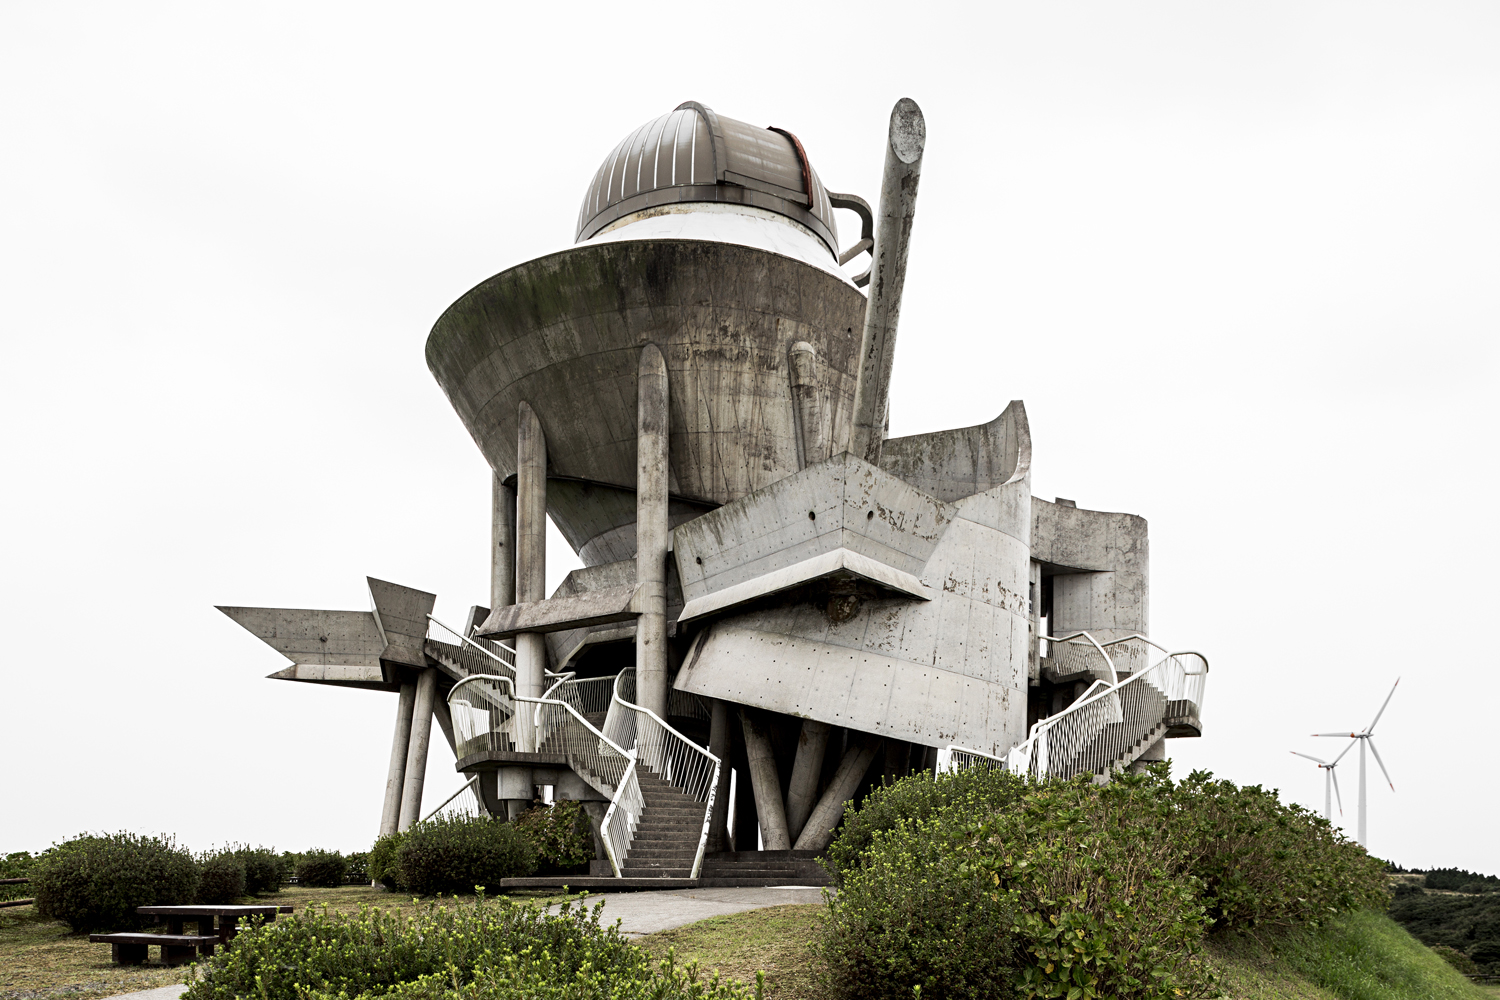 Kihoku Tenkyukan, an astronomical museum and observatory designed by Takasaki Architects, 1995. Kanoya, Japan. Photo: Stefano Perego.